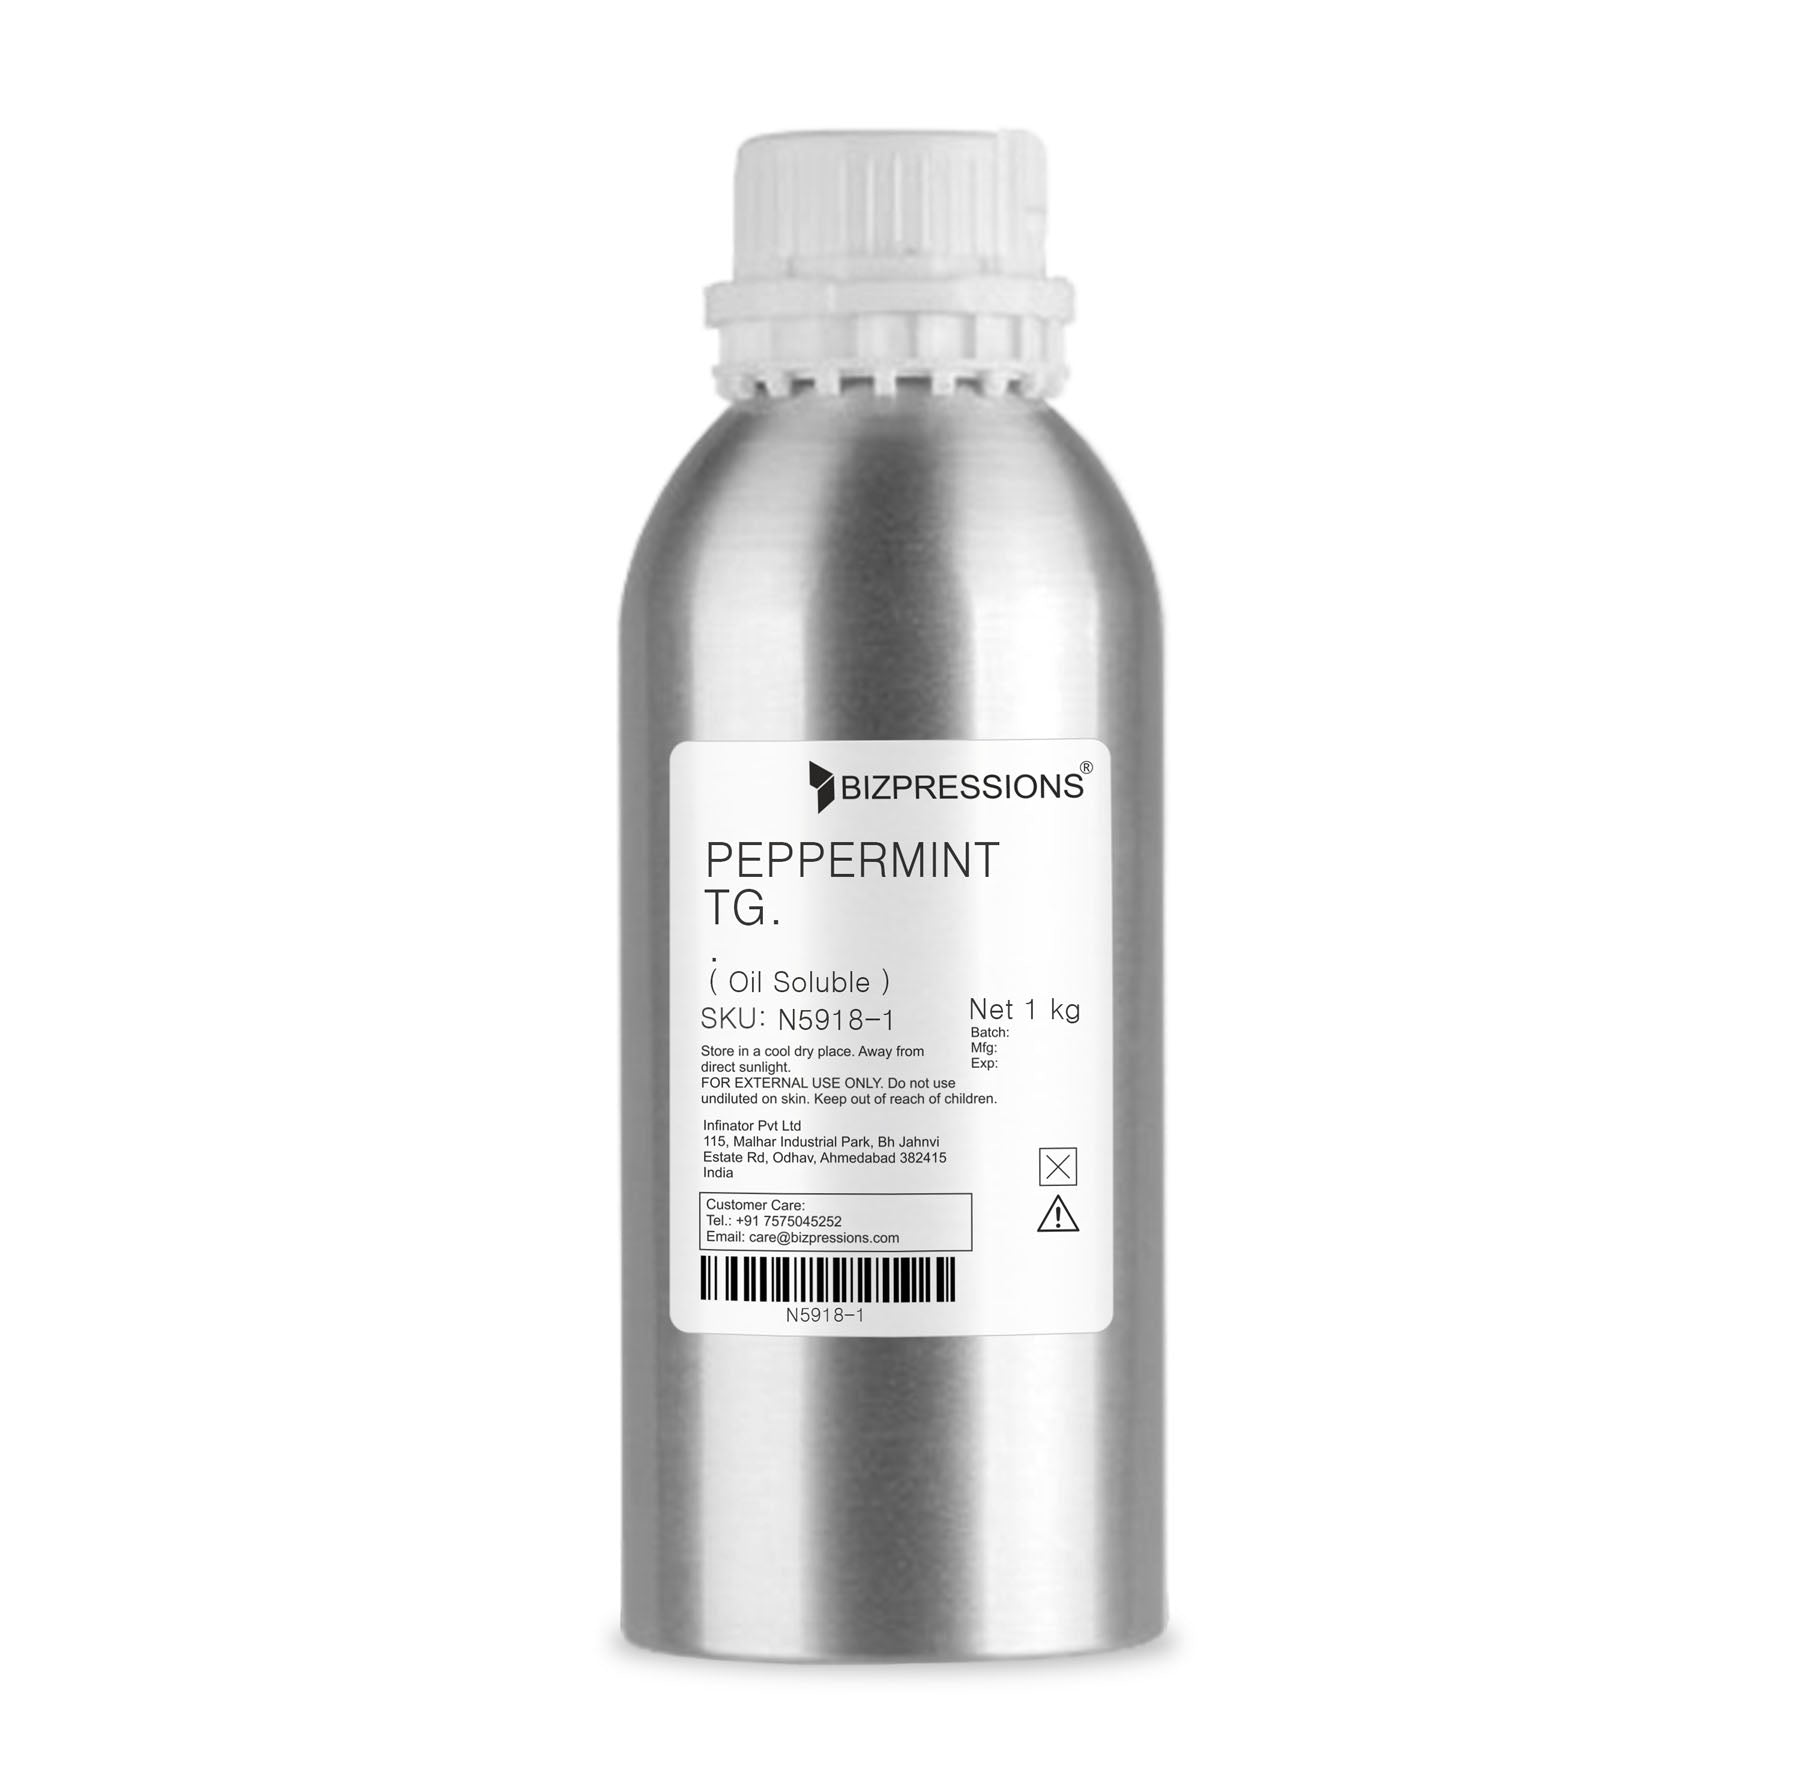 PEPPERMINT TG. - Fragrance ( Oil Soluble ) - 1 kg